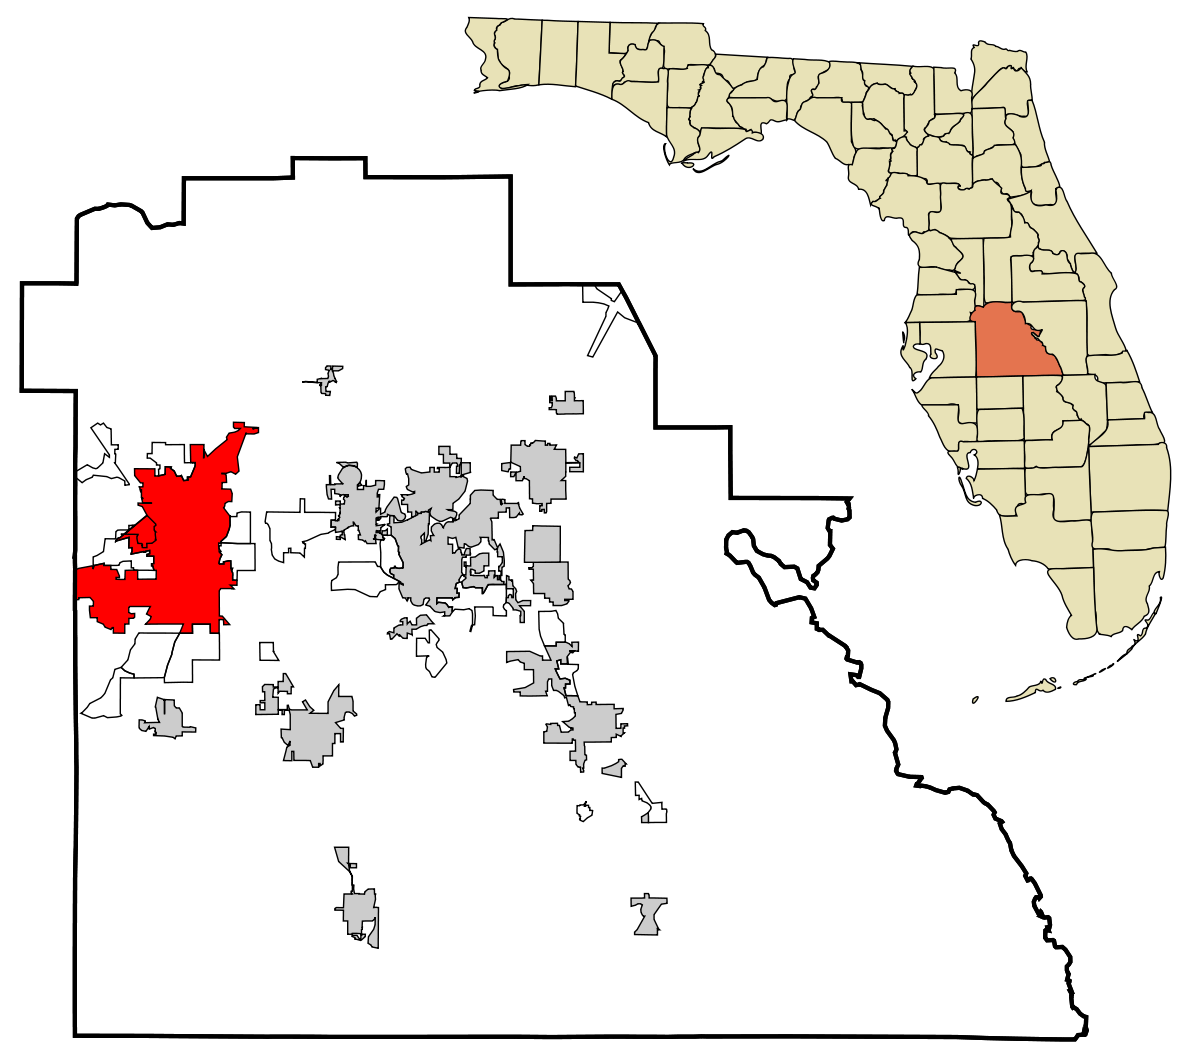 lakeland, florida - wikipedia